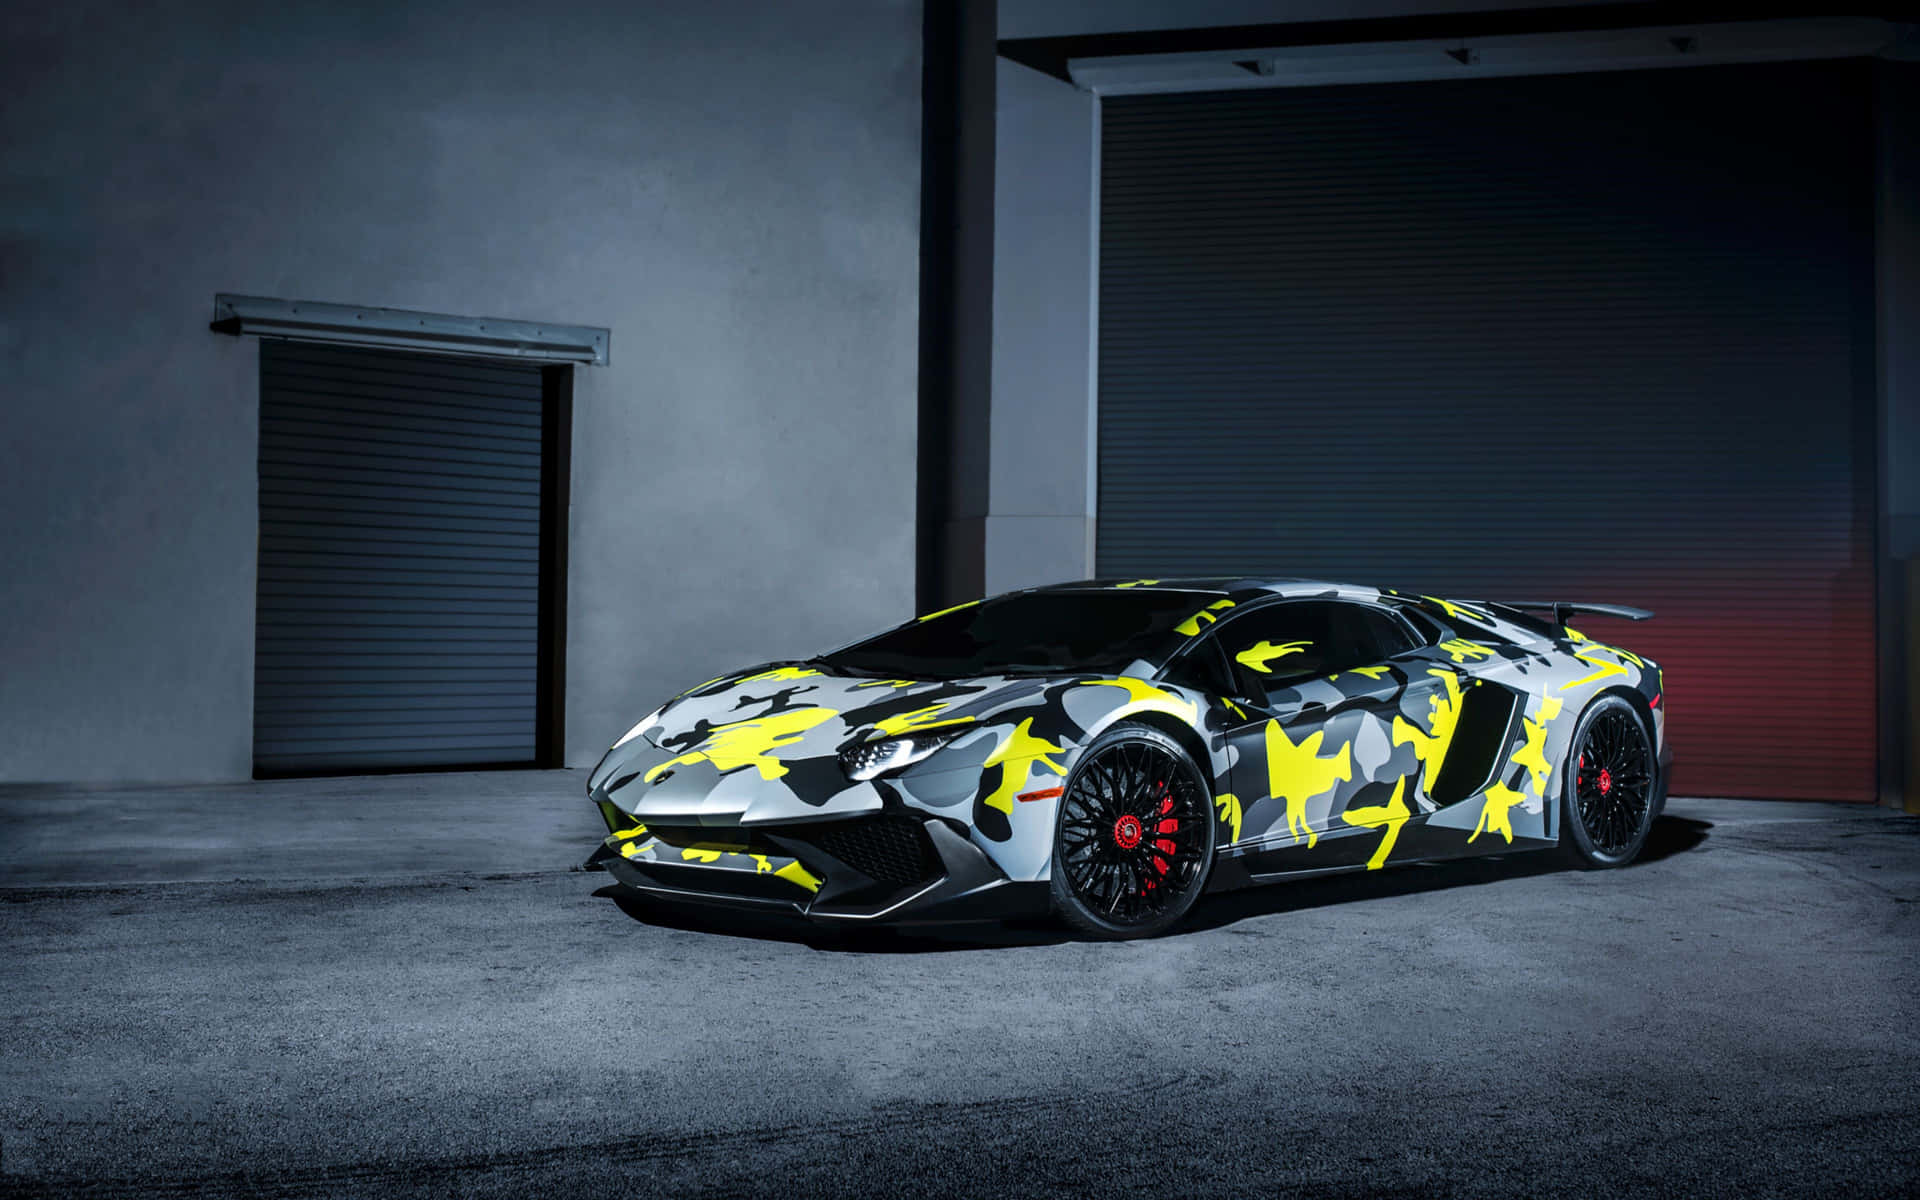 Revving Up Fun Behind the Wheel - Cool Lamborghini Wallpaper